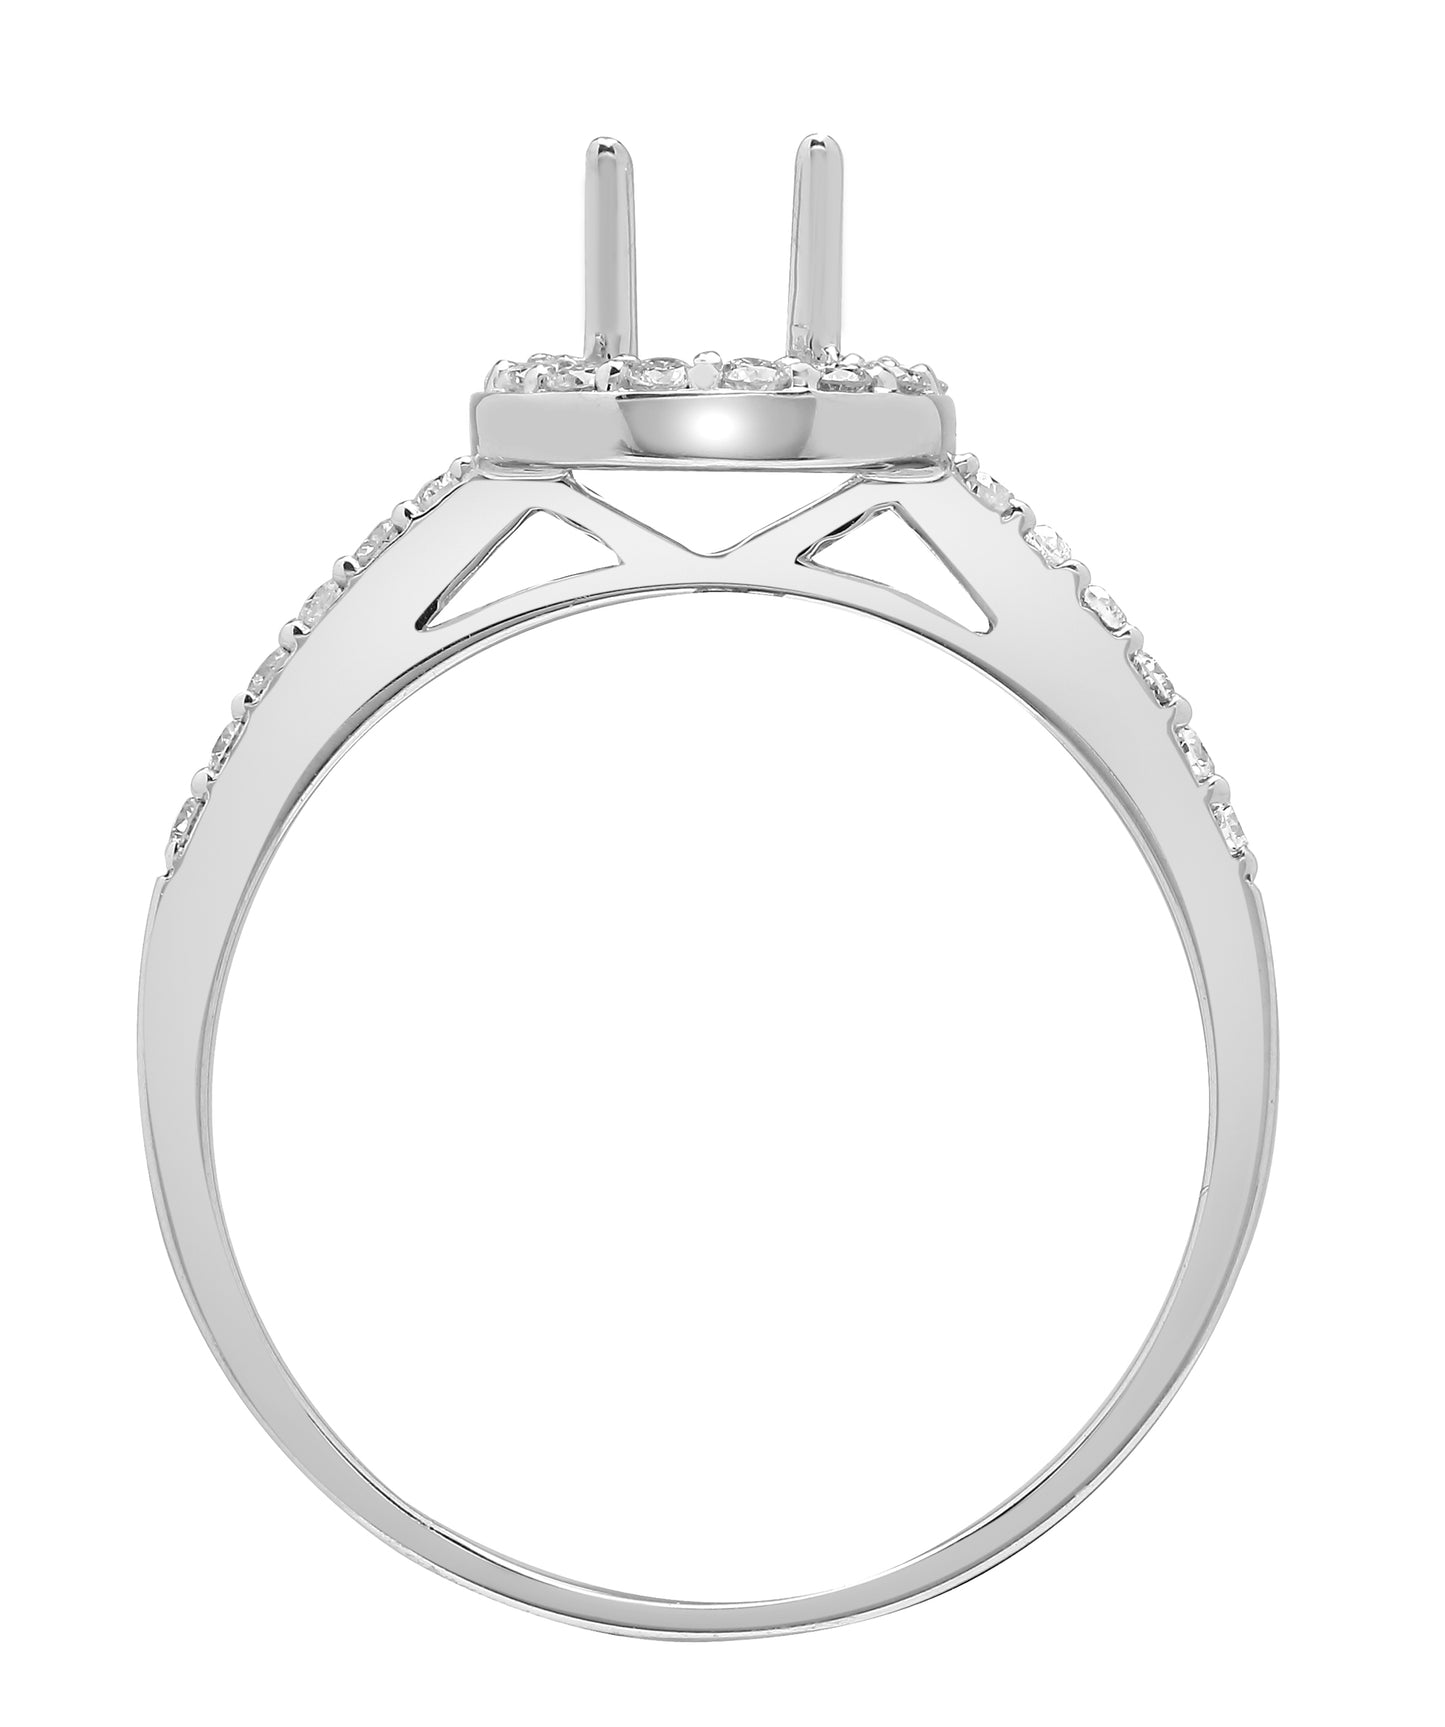 18ct White Gold  0.26ct Diamond Semi Set Mount Engagement Ring 8mm - 18R825-075